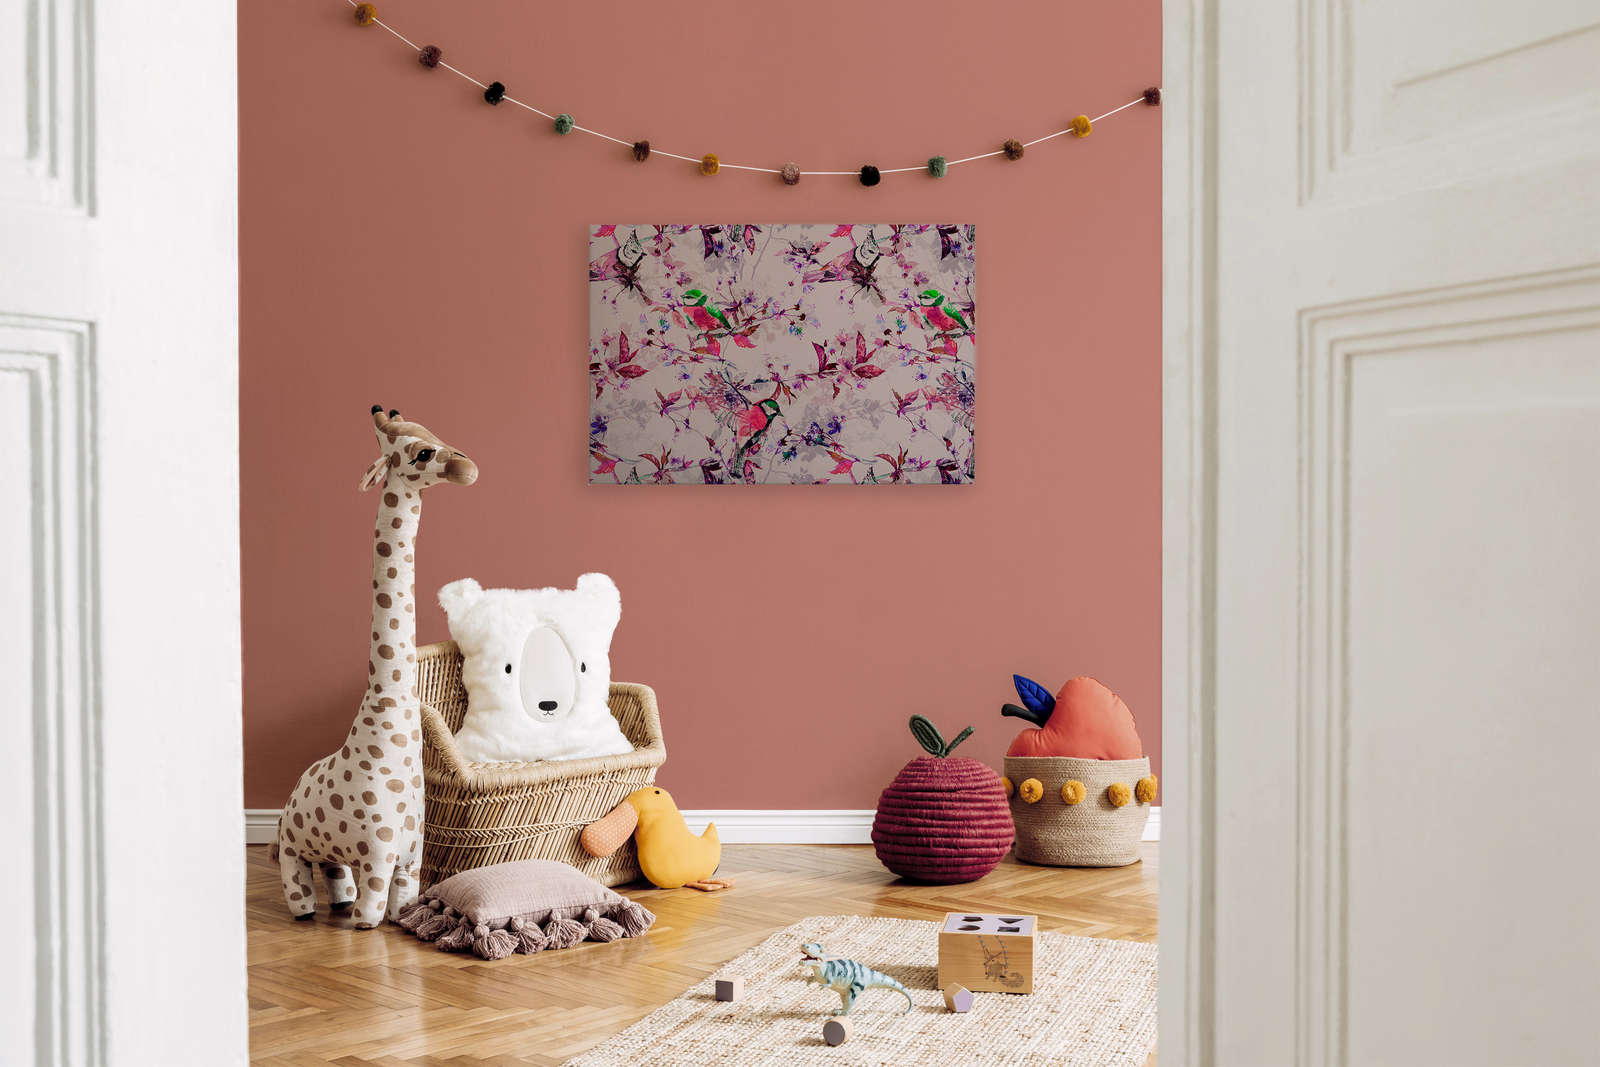             Pájaros Pintura sobre lienzo estilo collage | rosa, azul - 0,90 m x 0,60 m
        